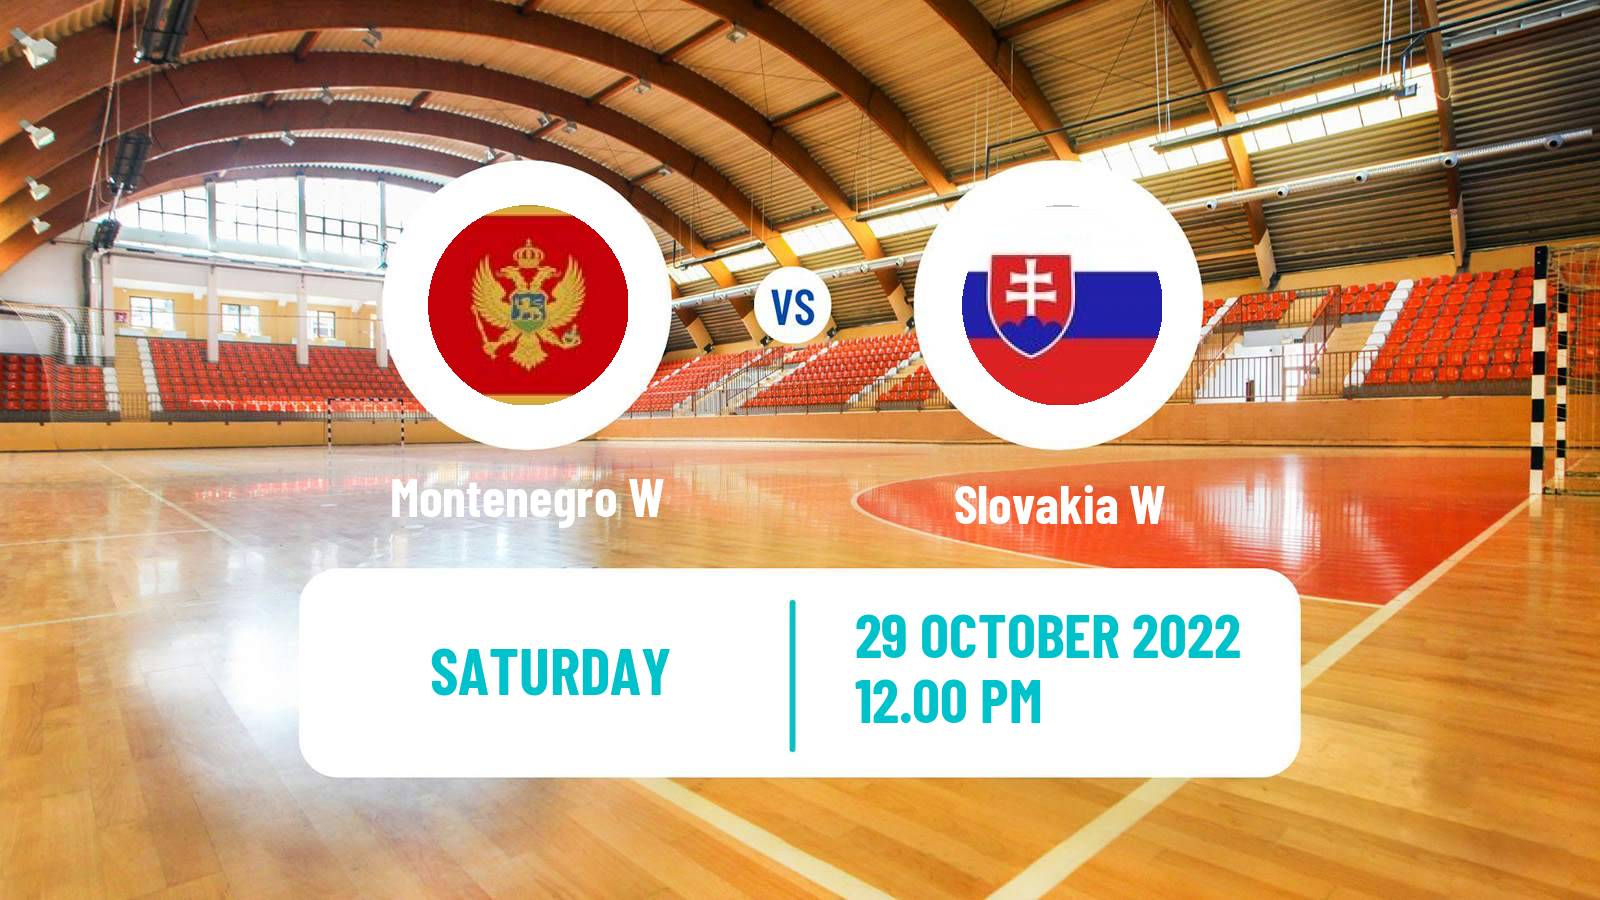 Handball Friendly International Handball Women Montenegro W - Slovakia W